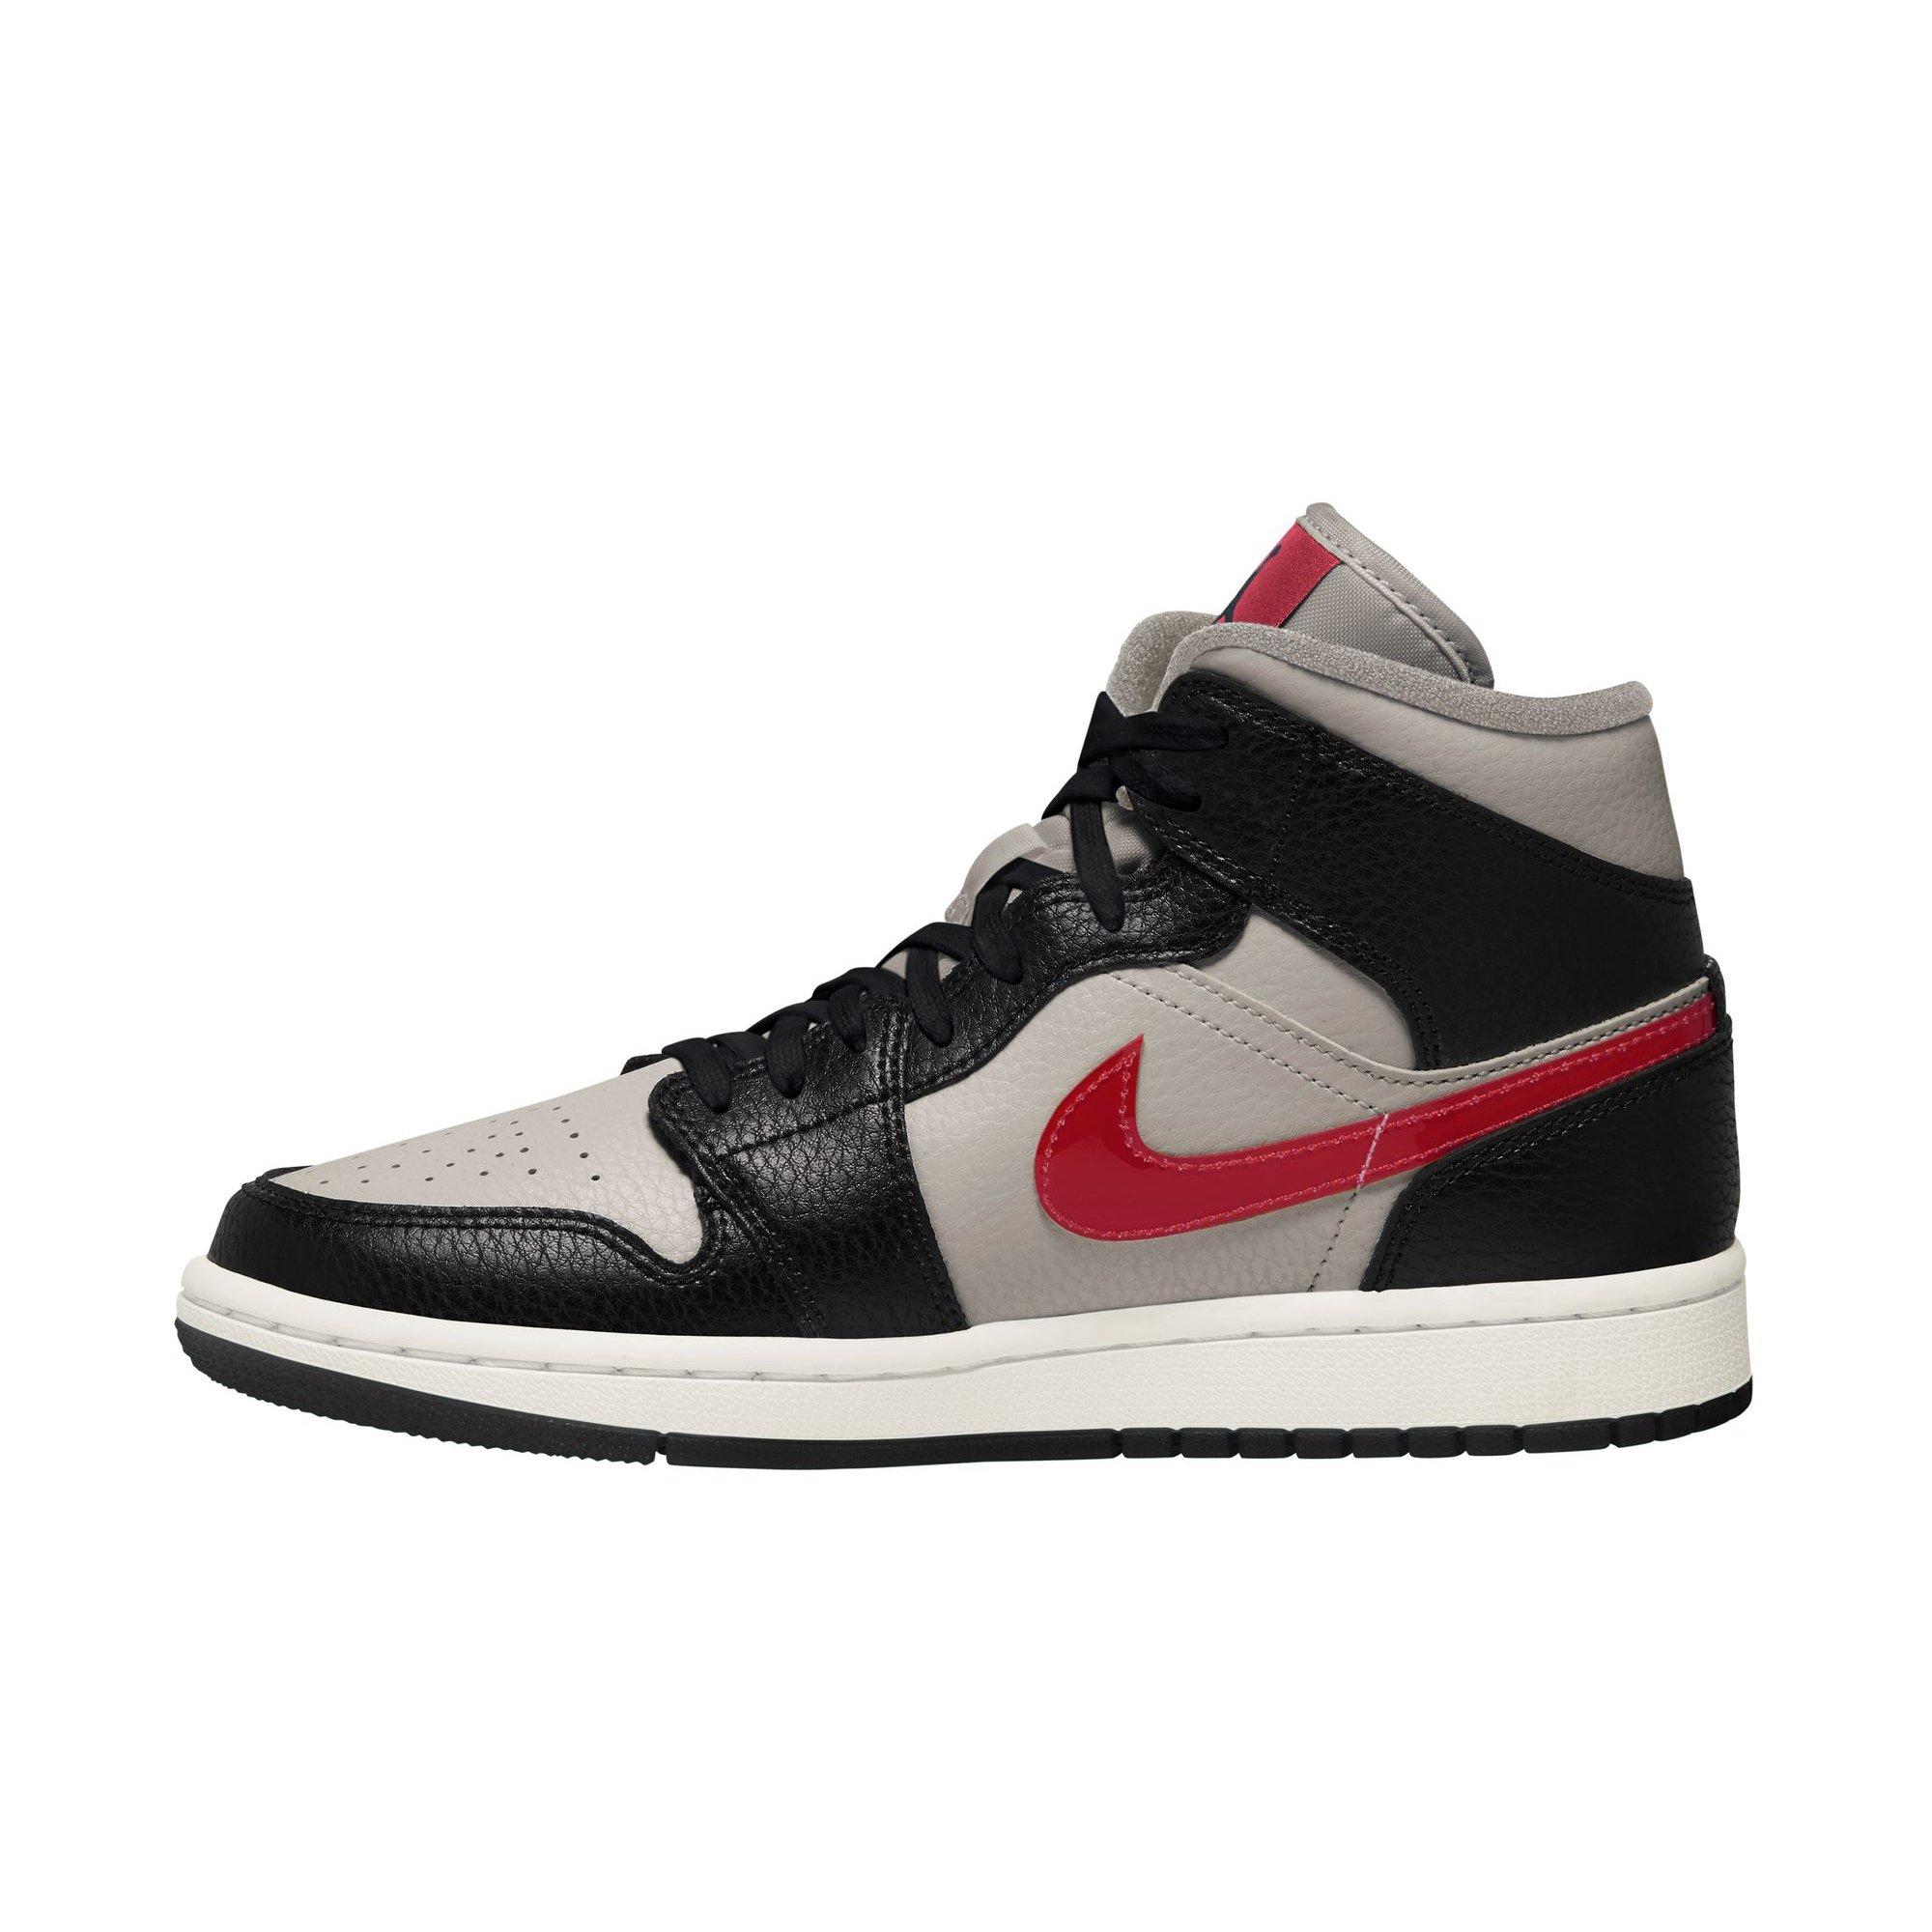 Jordan 1 Low SE Gym Red/Cement Grey/Black/White Women's Shoe - Hibbett